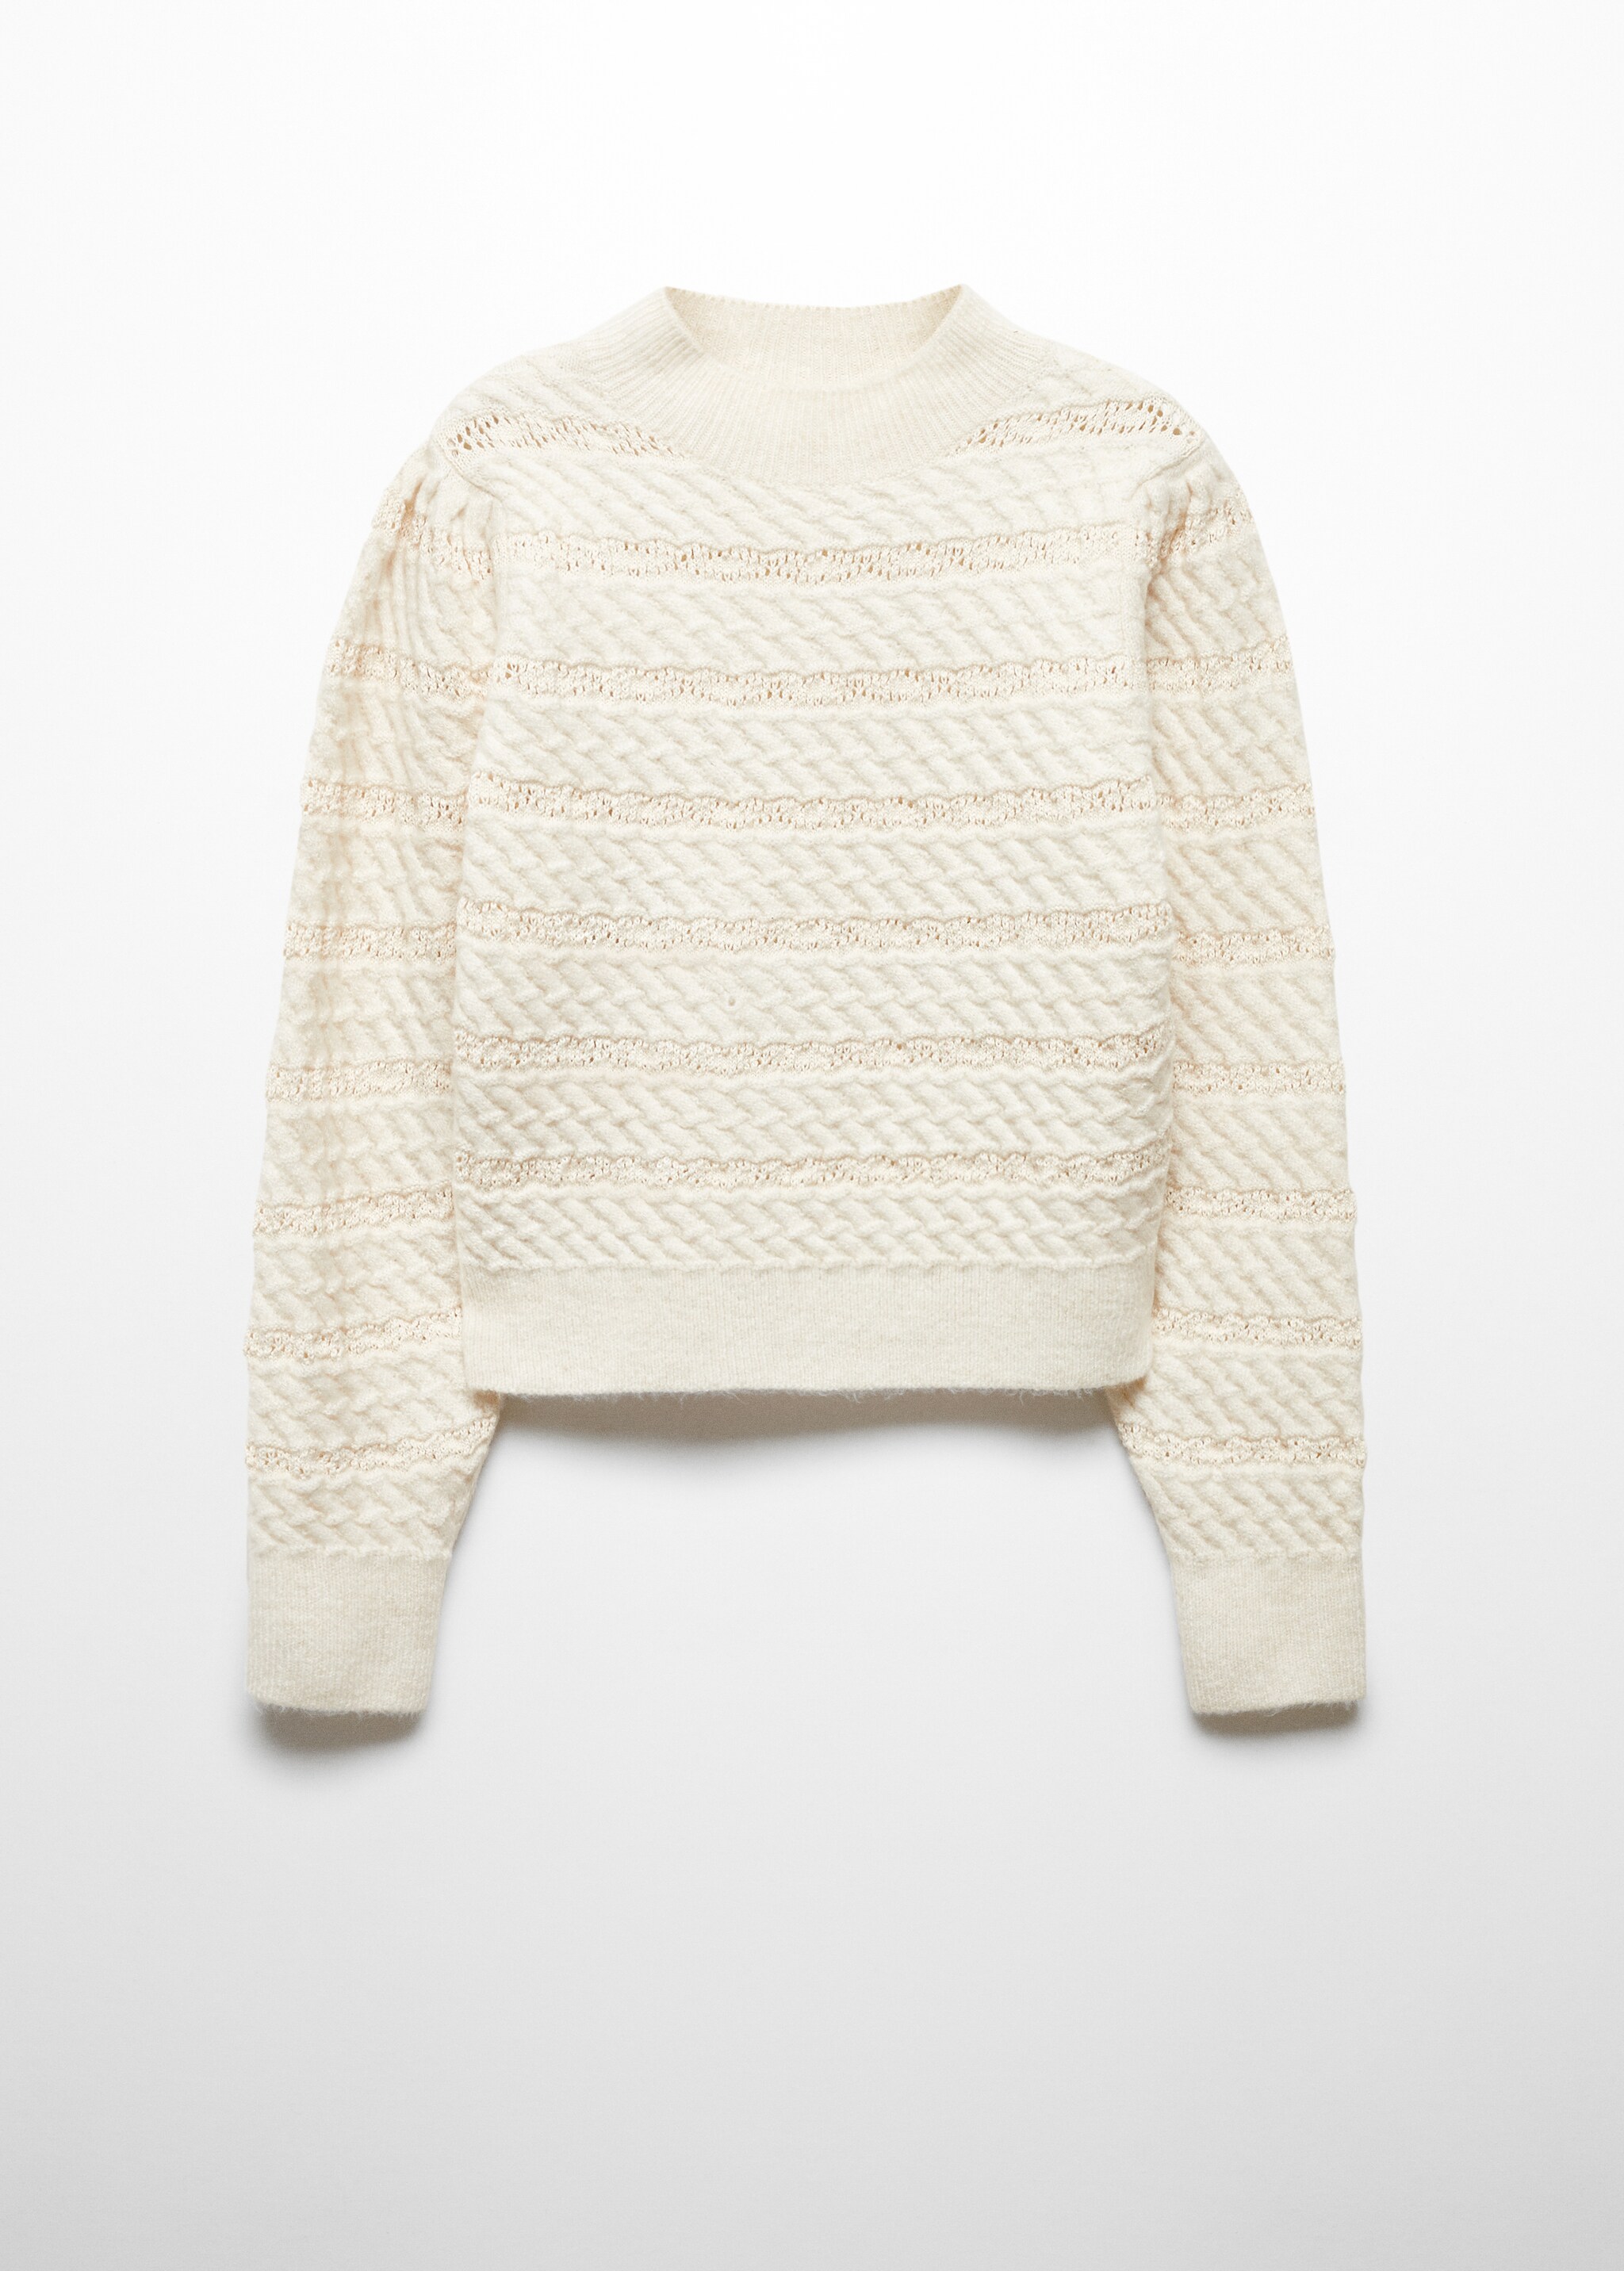 Knitted braided sweater - Articol fără model